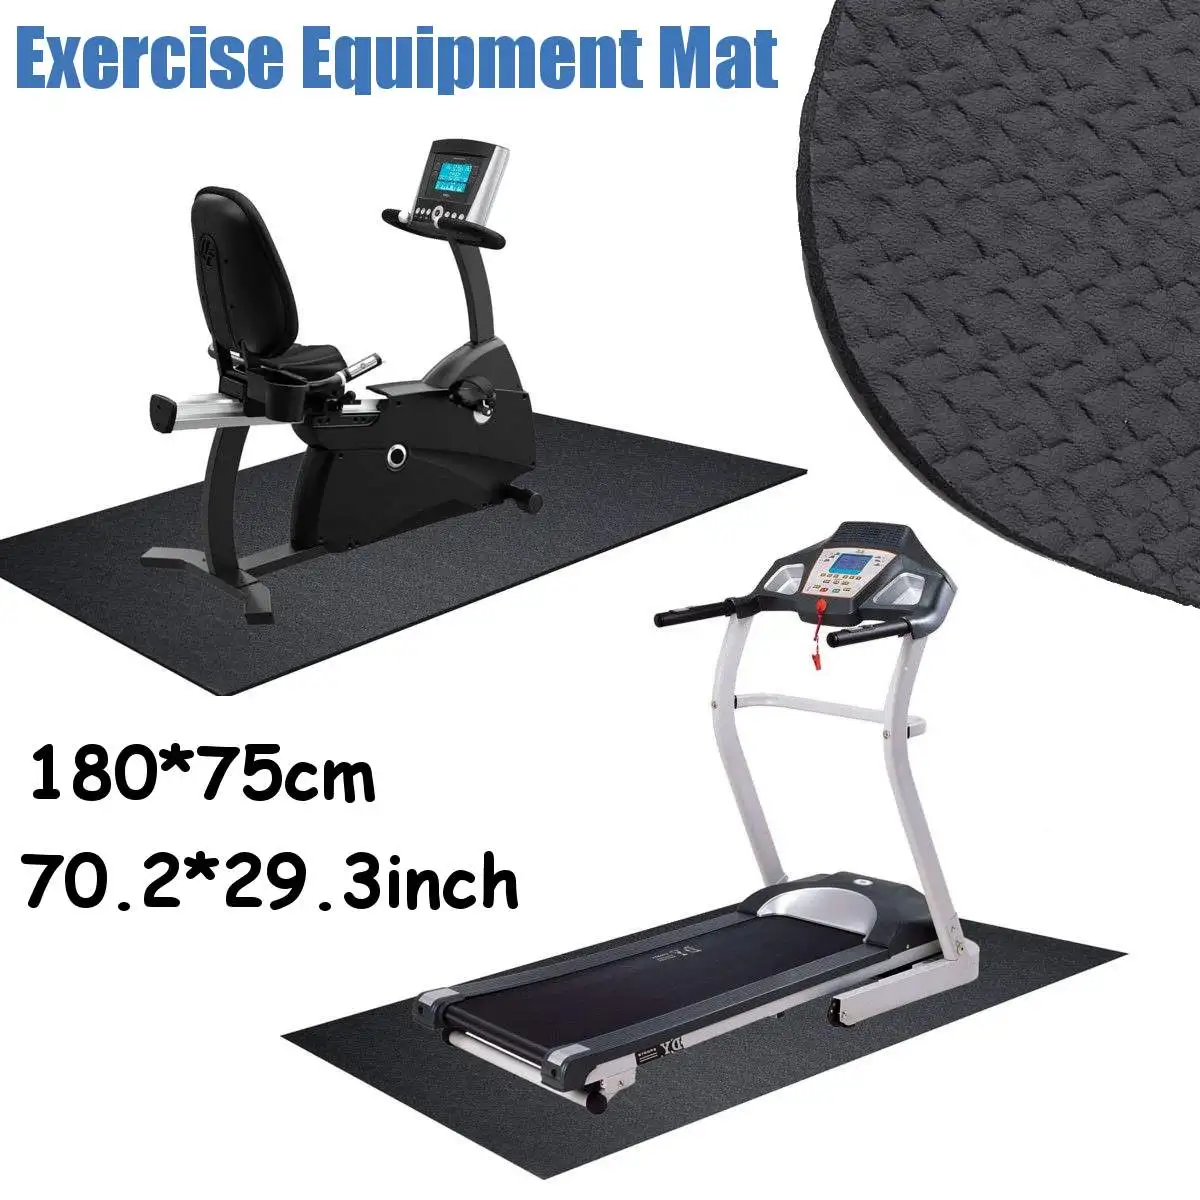 Exercise Mat Gym Fitness Equipment For Treadmill Bike Protect Floor Mat Running Machine Shock Absorbing Pad